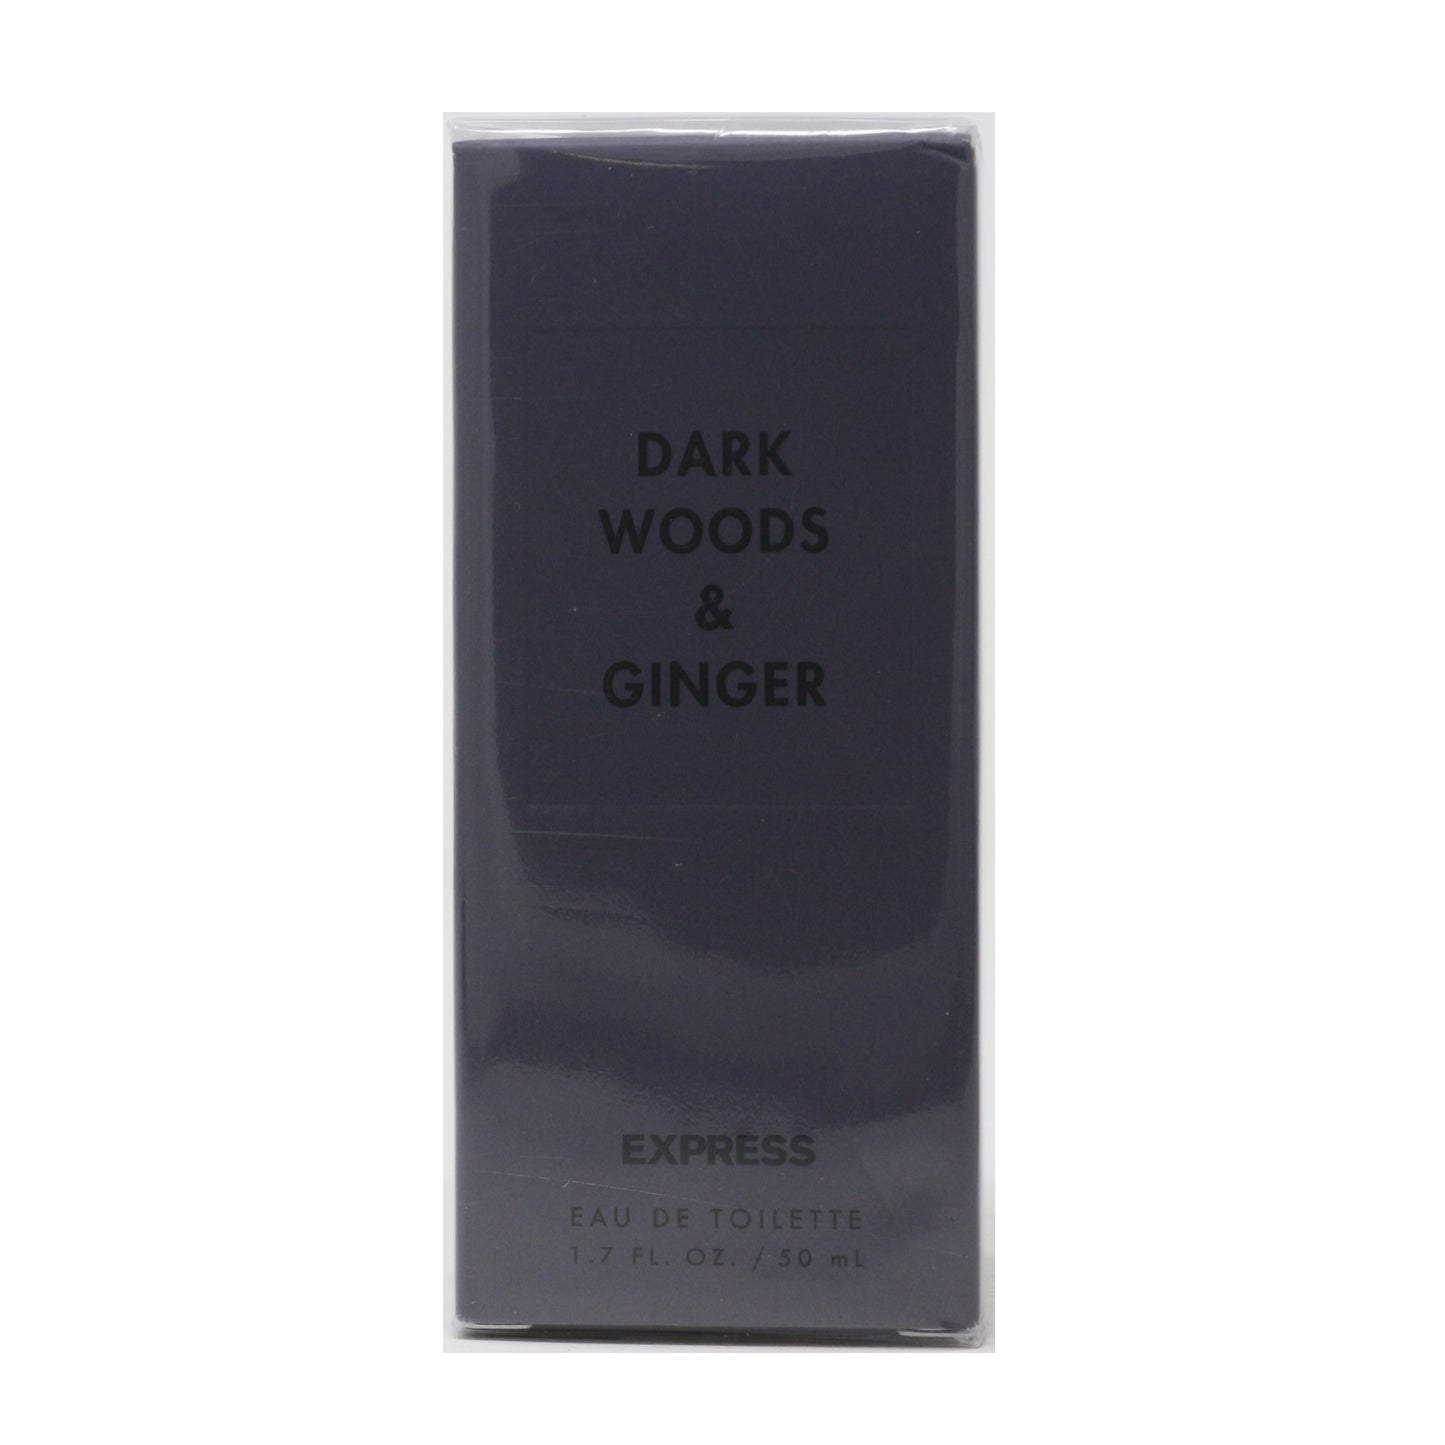 Express Dark Woods & Ginger Eau De Toilette 1.7oz/50ml New In Box